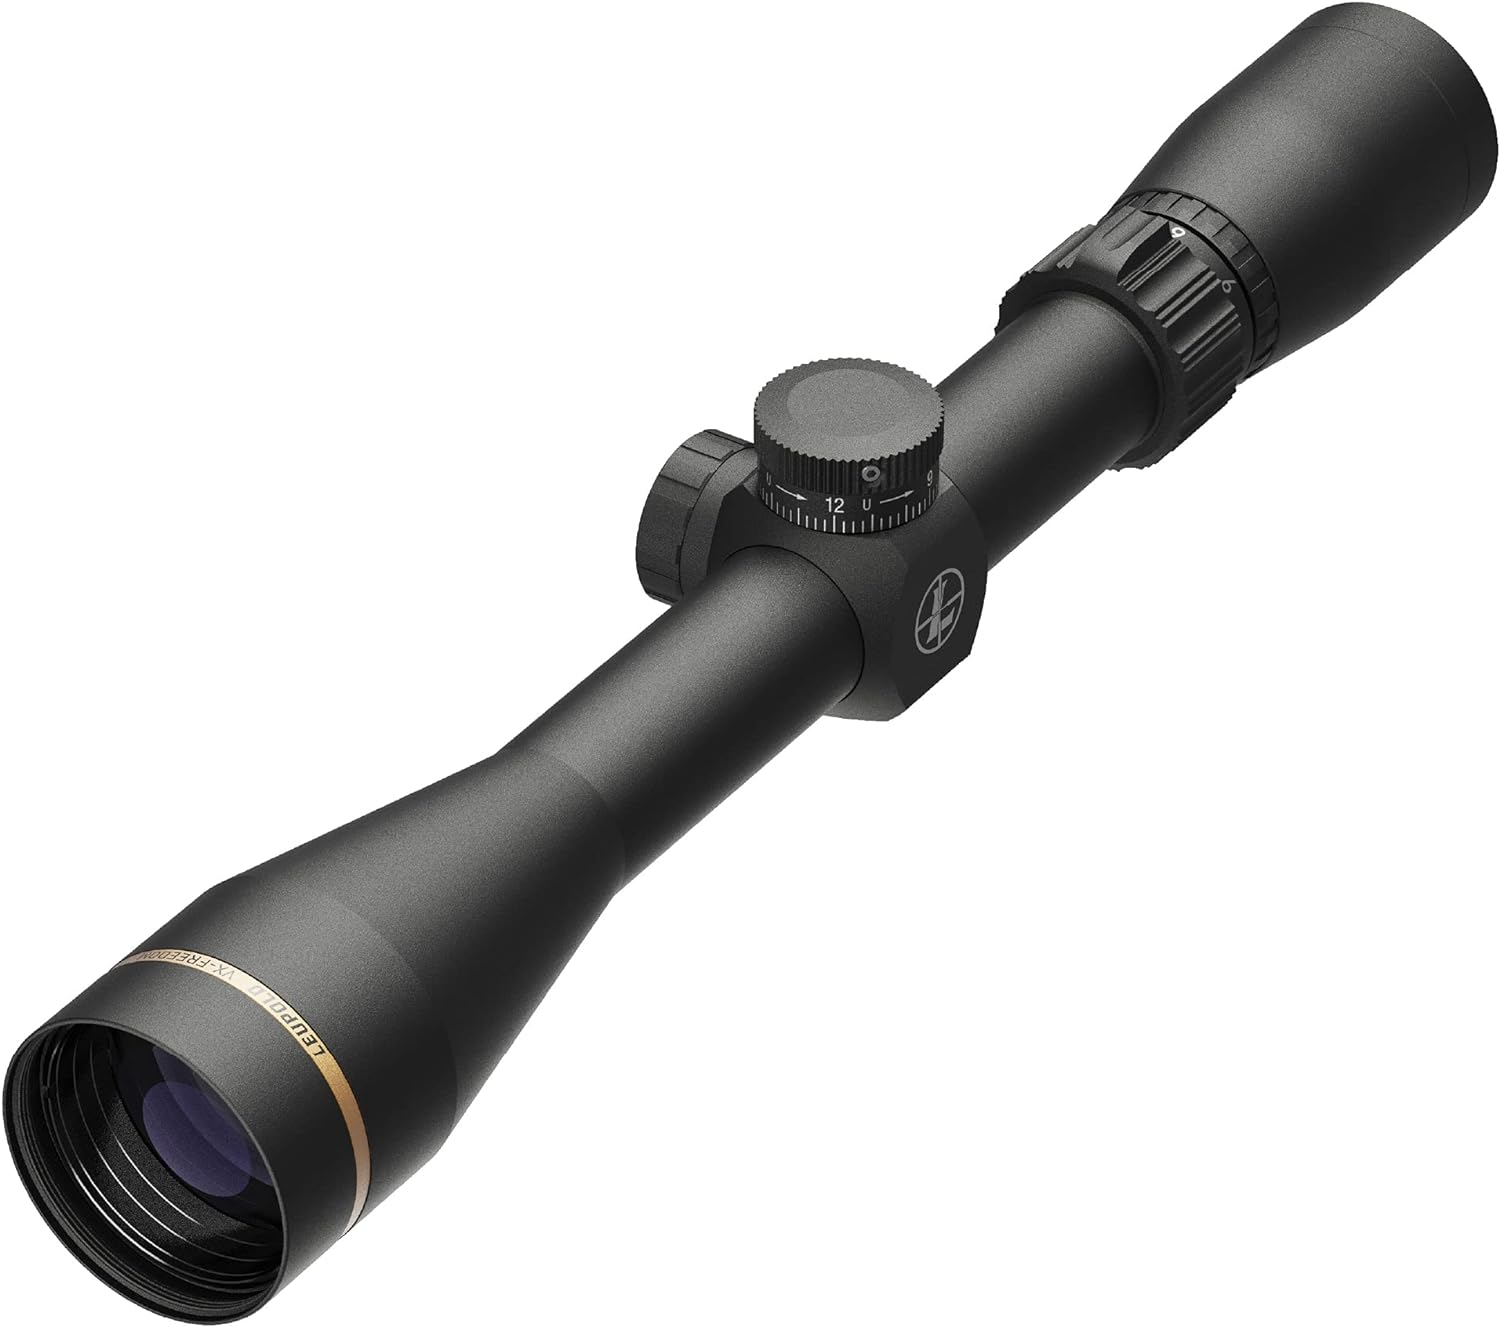 Leupold VX-Freedom 3-9x40mm Riflescope Review